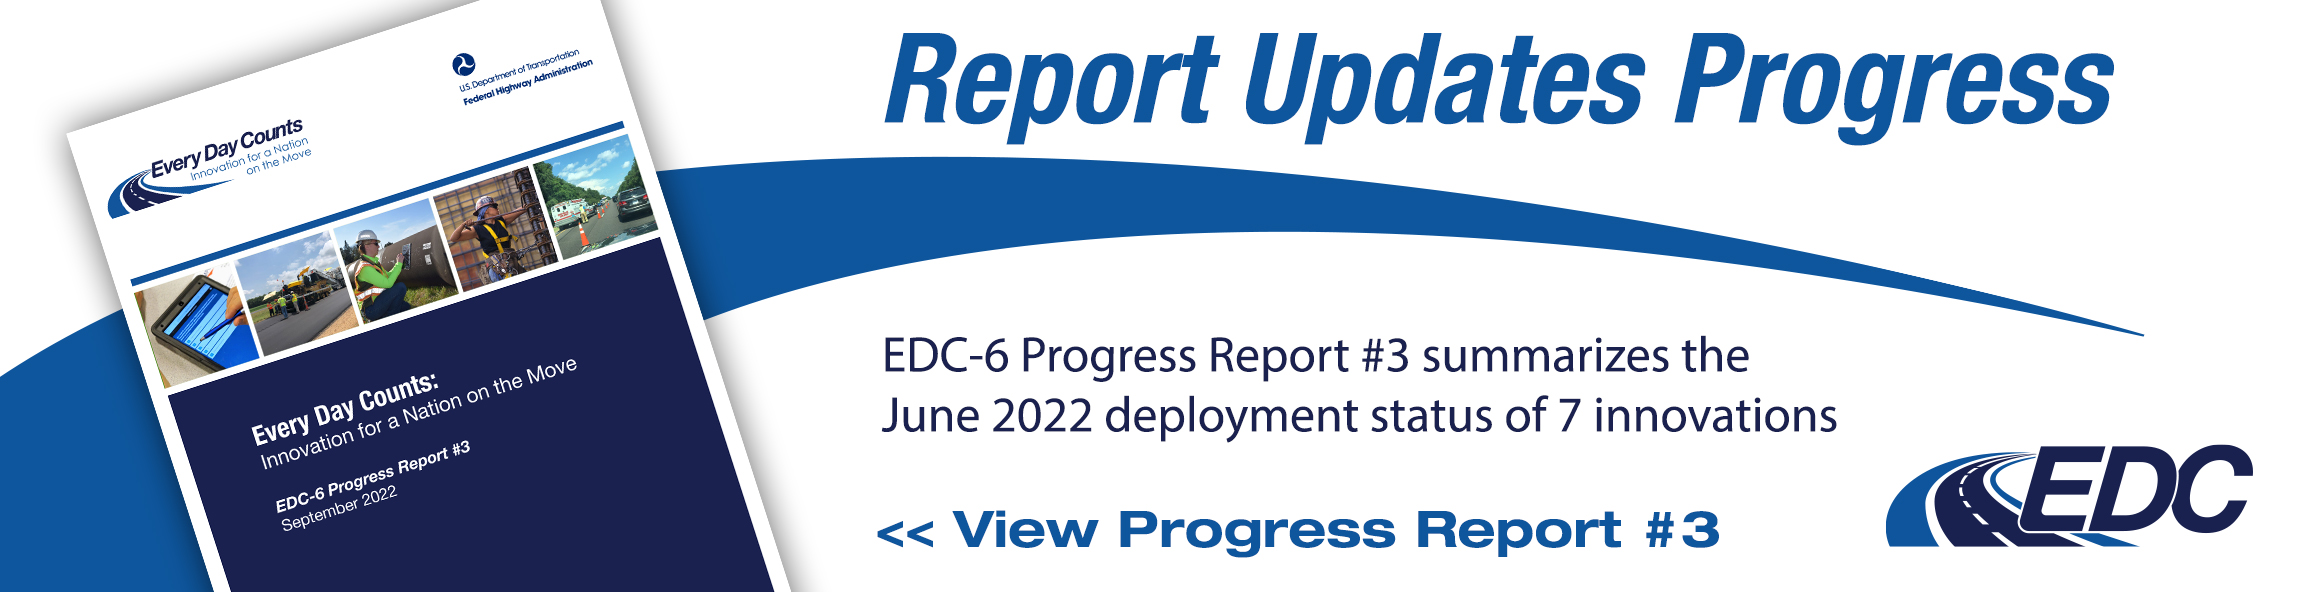 EDC-6 Progress Report #2 summarizes the December 2021 deplyment status of 7 innovations.